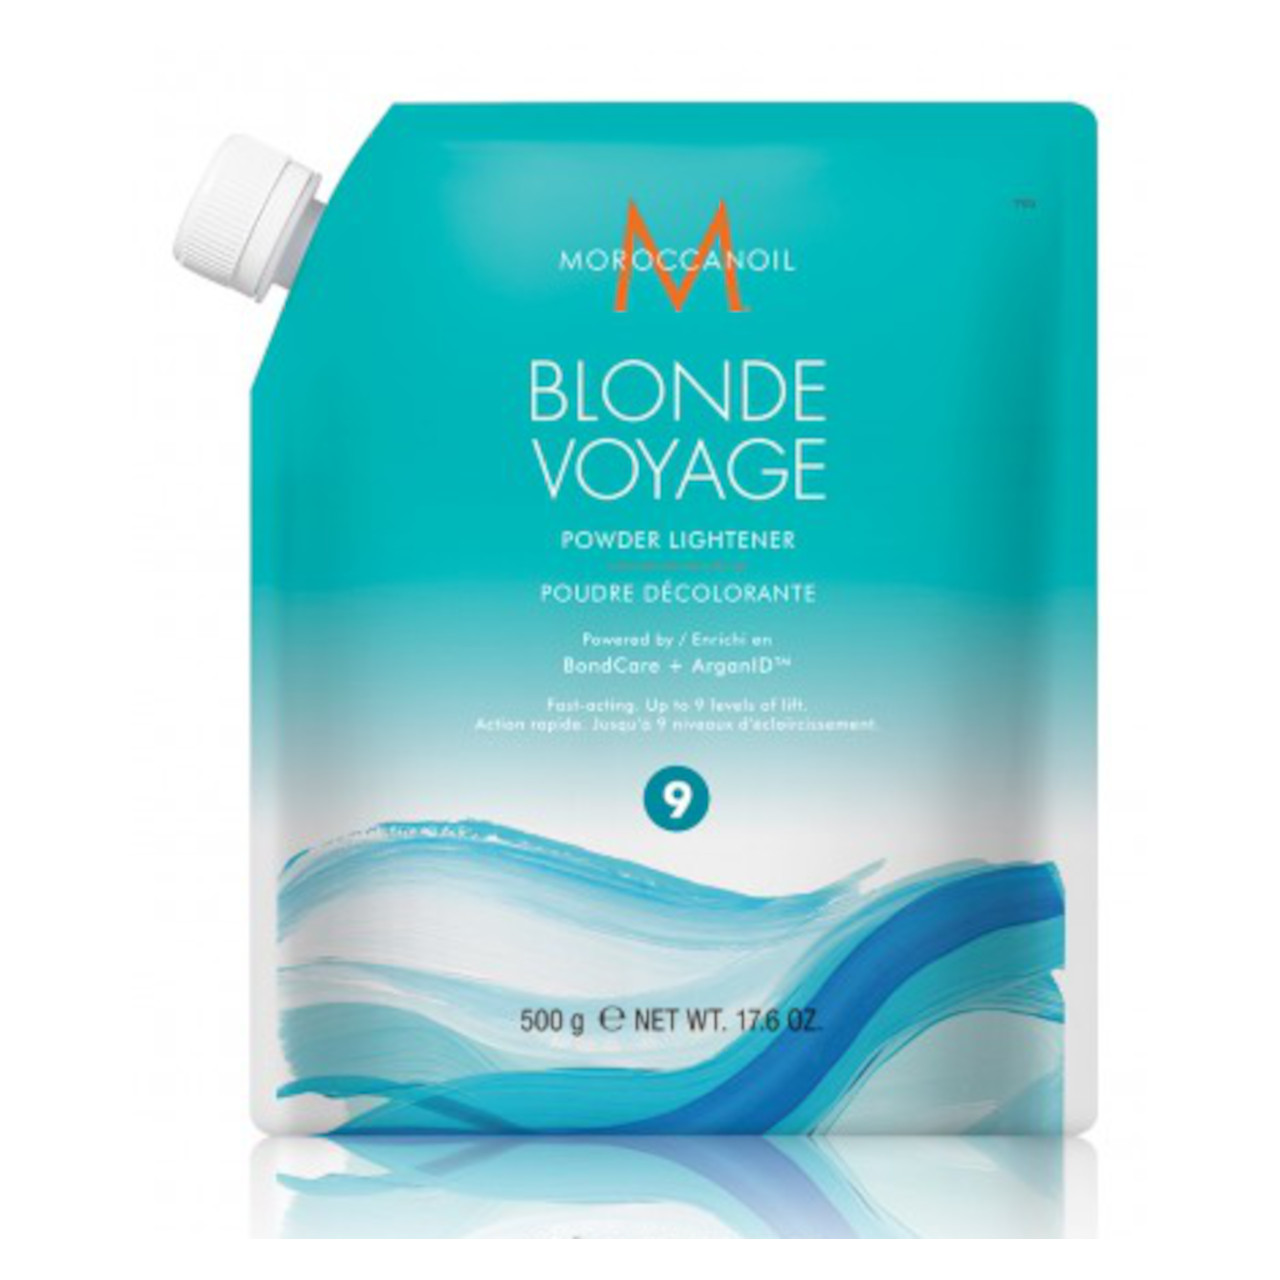 Moroccanoil Blonde Voyage Powder Lightener - 17.6 oz Questions & Answers